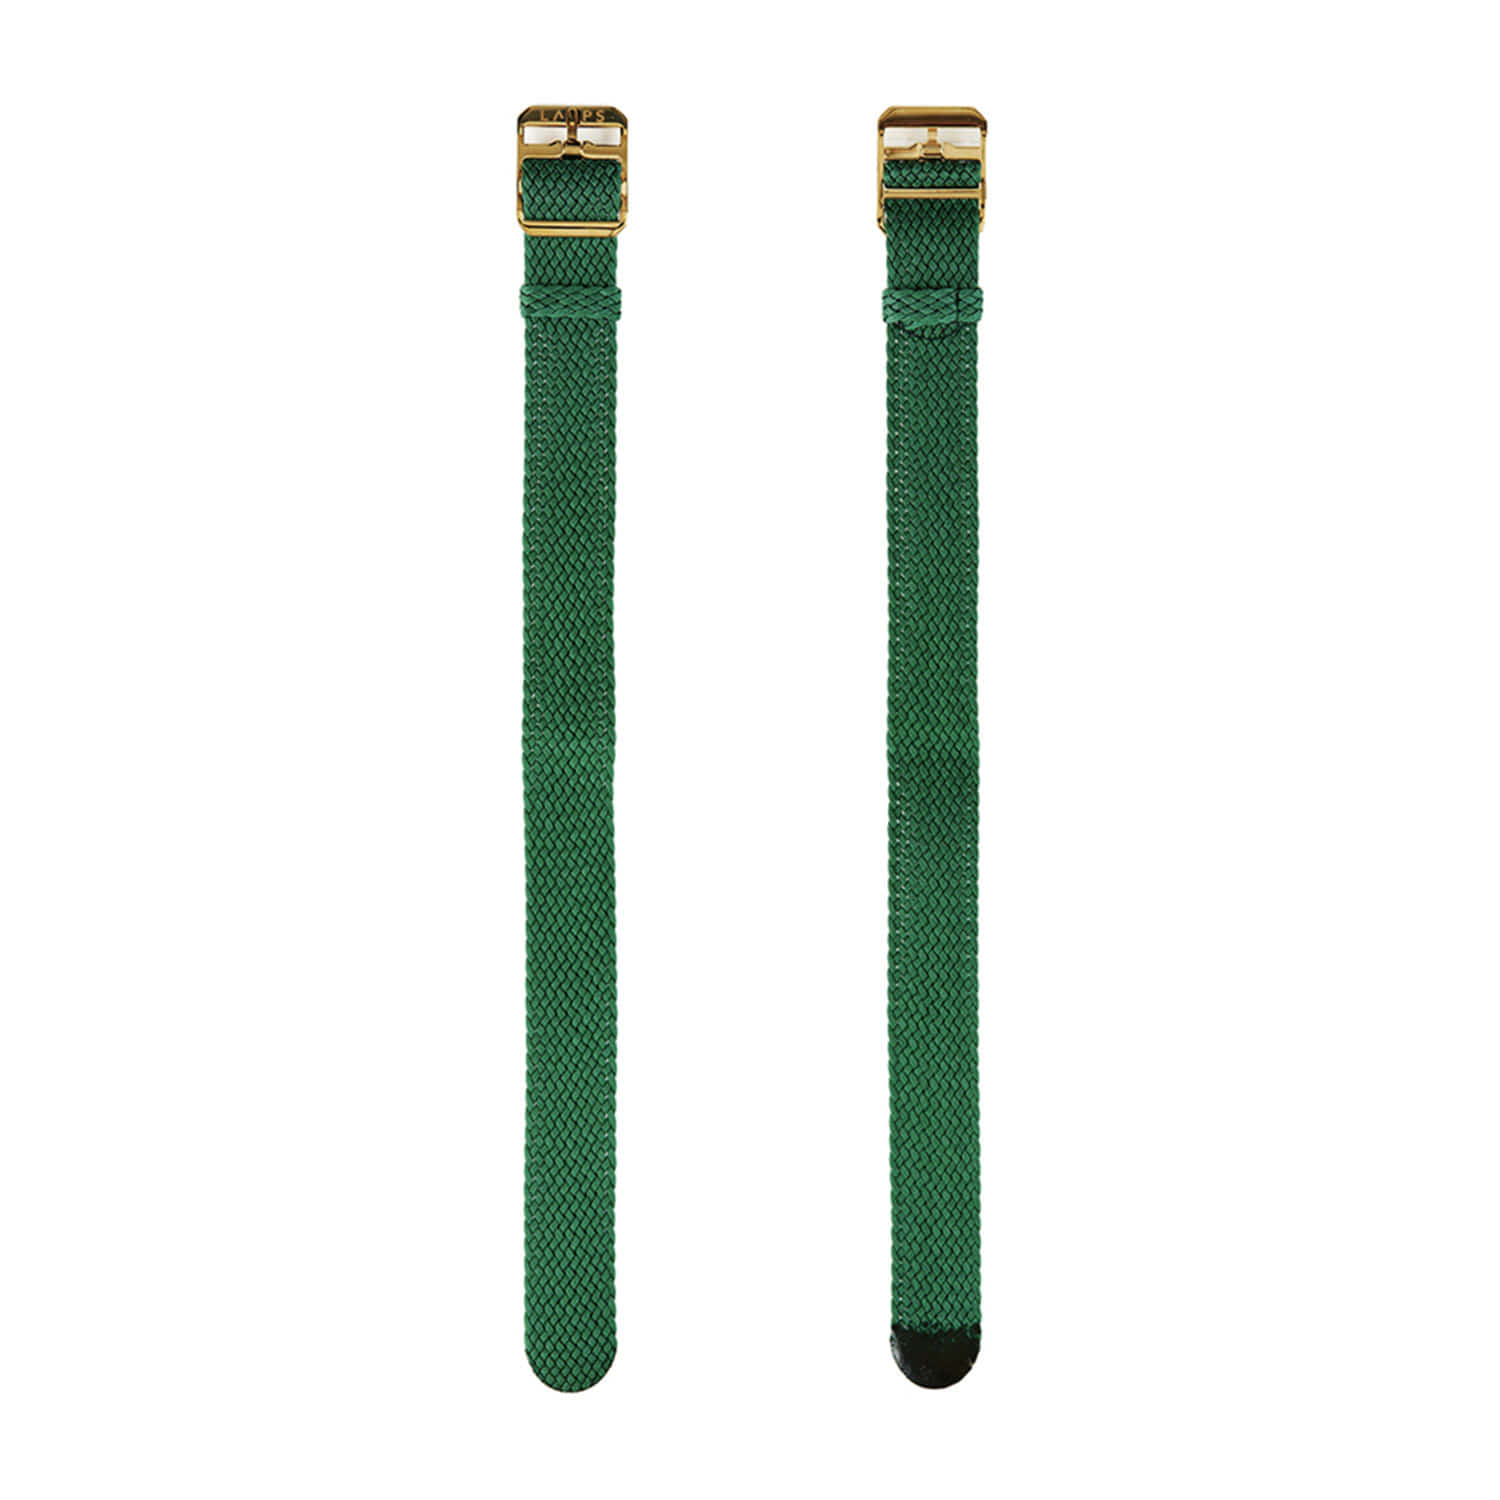 18mm Perlon Green Strap - Gold Buckle